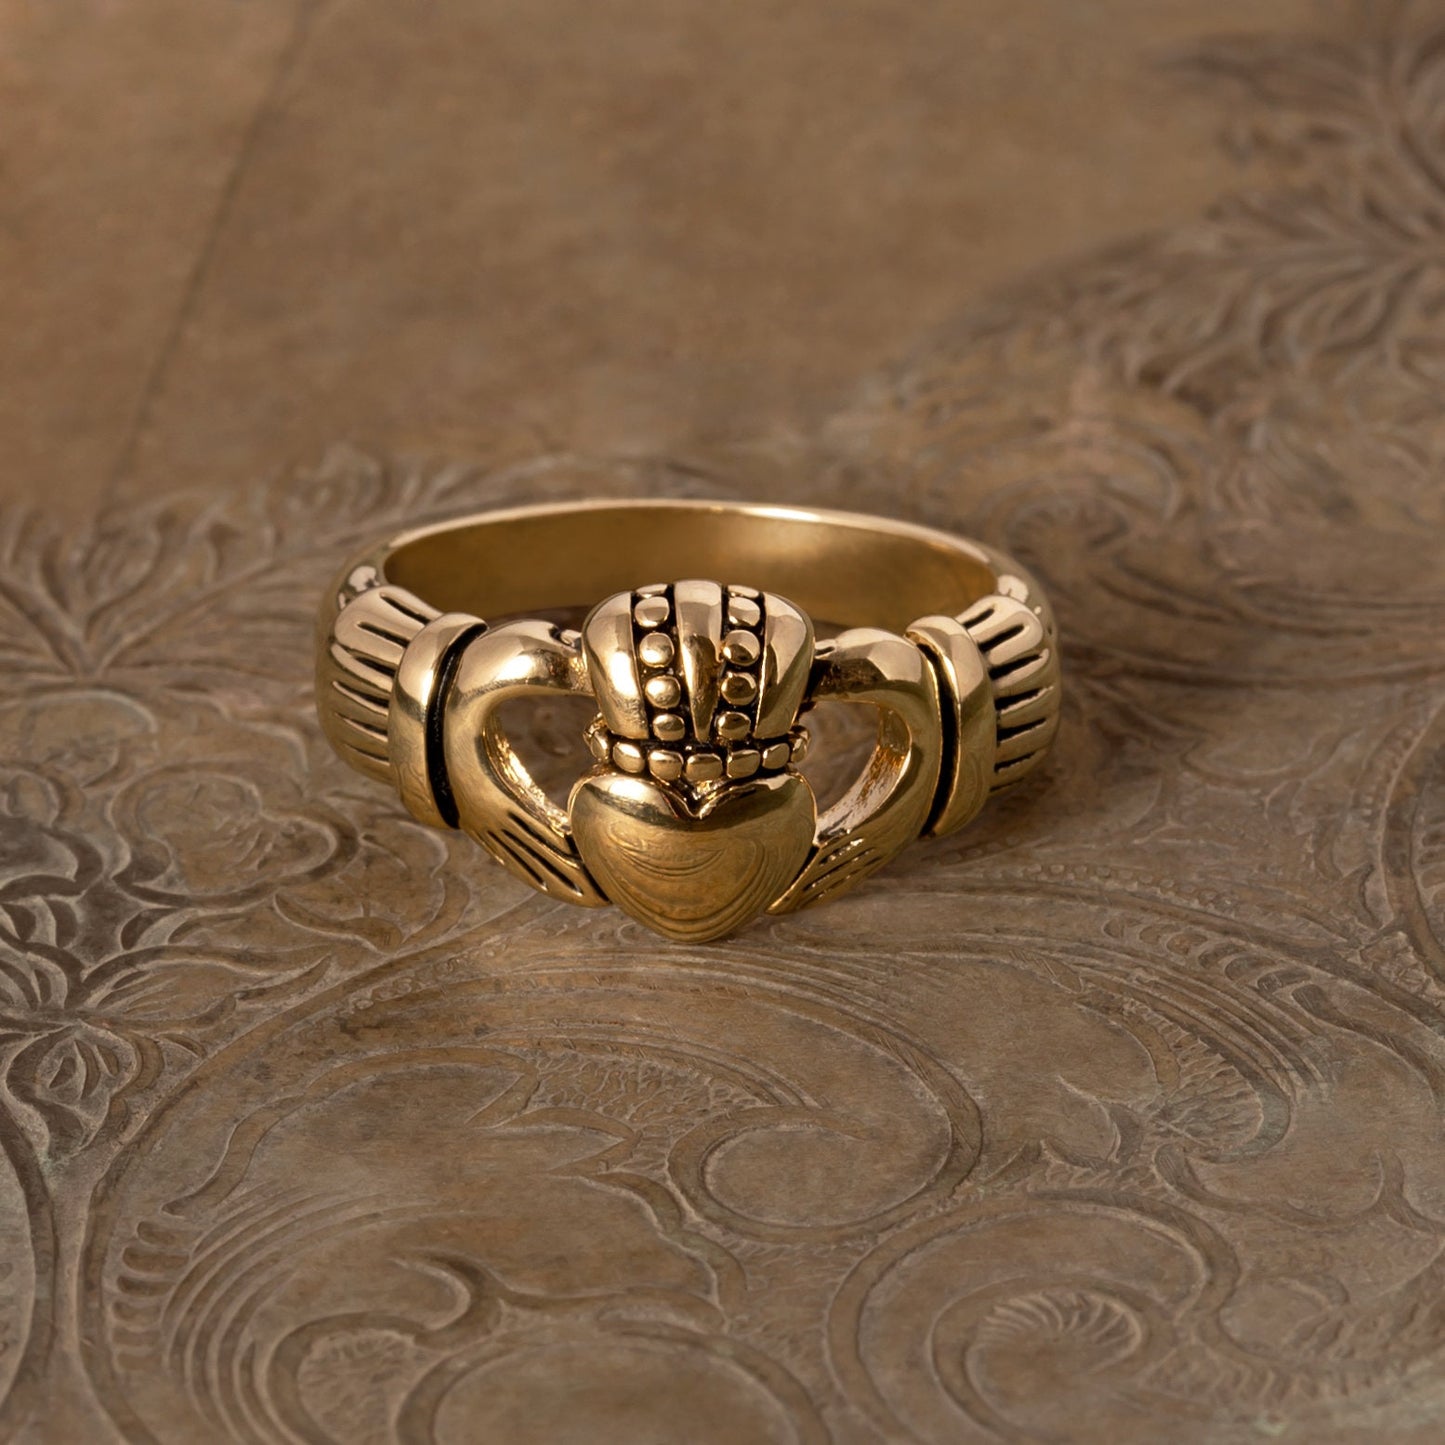 irish jewelry-claddagh ring-gold celtic